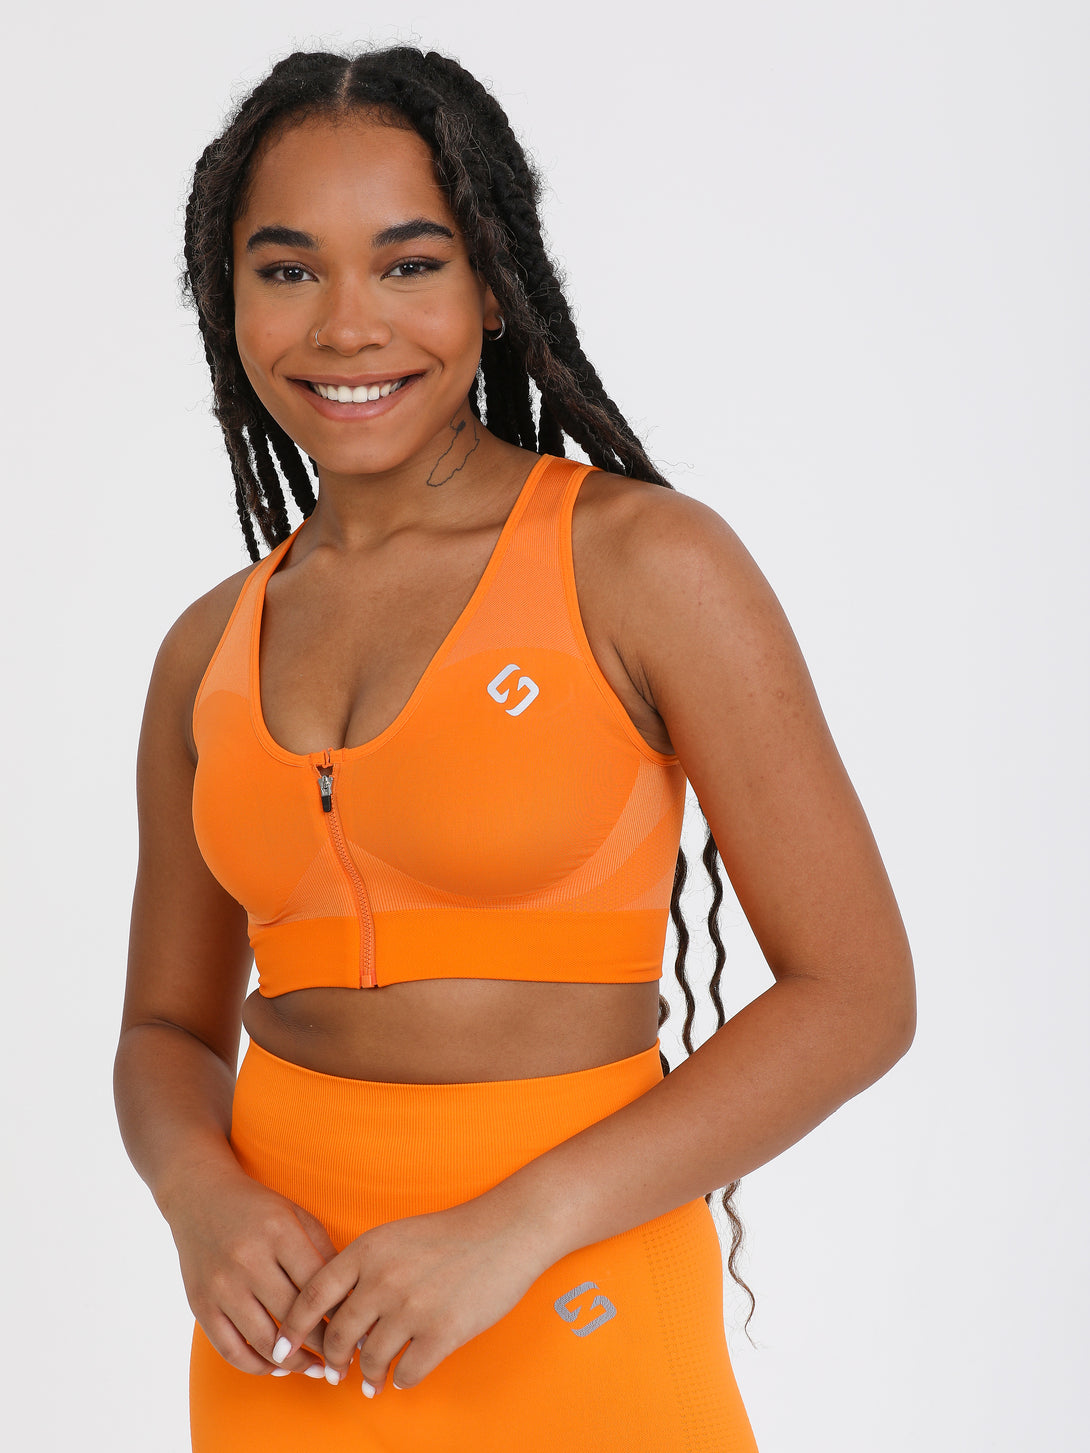 A Woman Wearing Orange Color High Impact Sports Bra